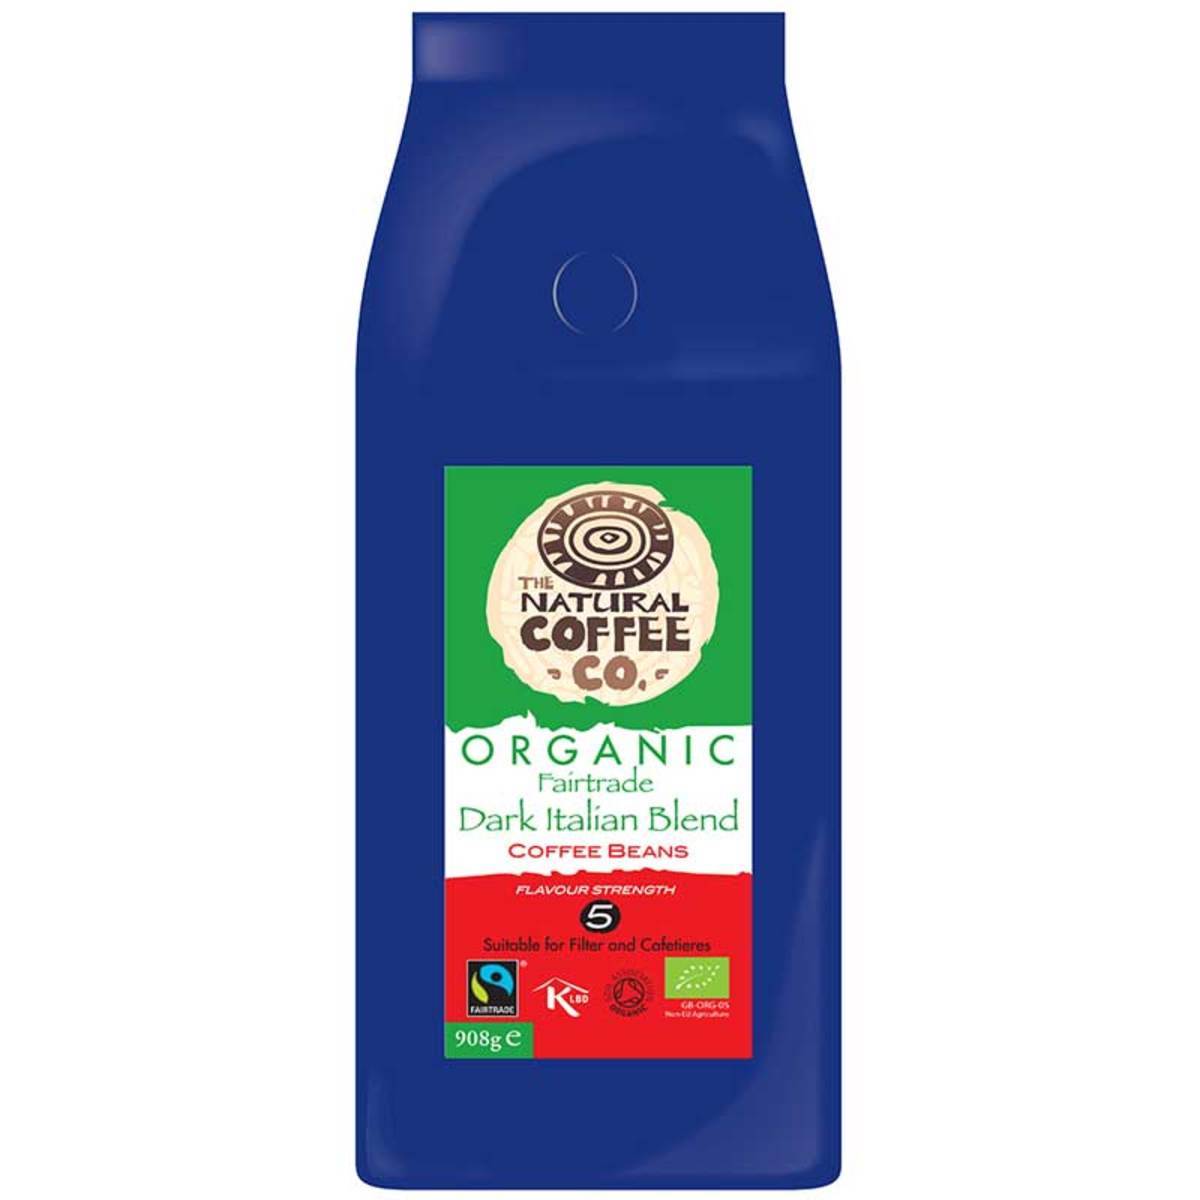 The Natural Coffee Co. Organic Dark Italian Blend Whole Bean Coffee, 908g